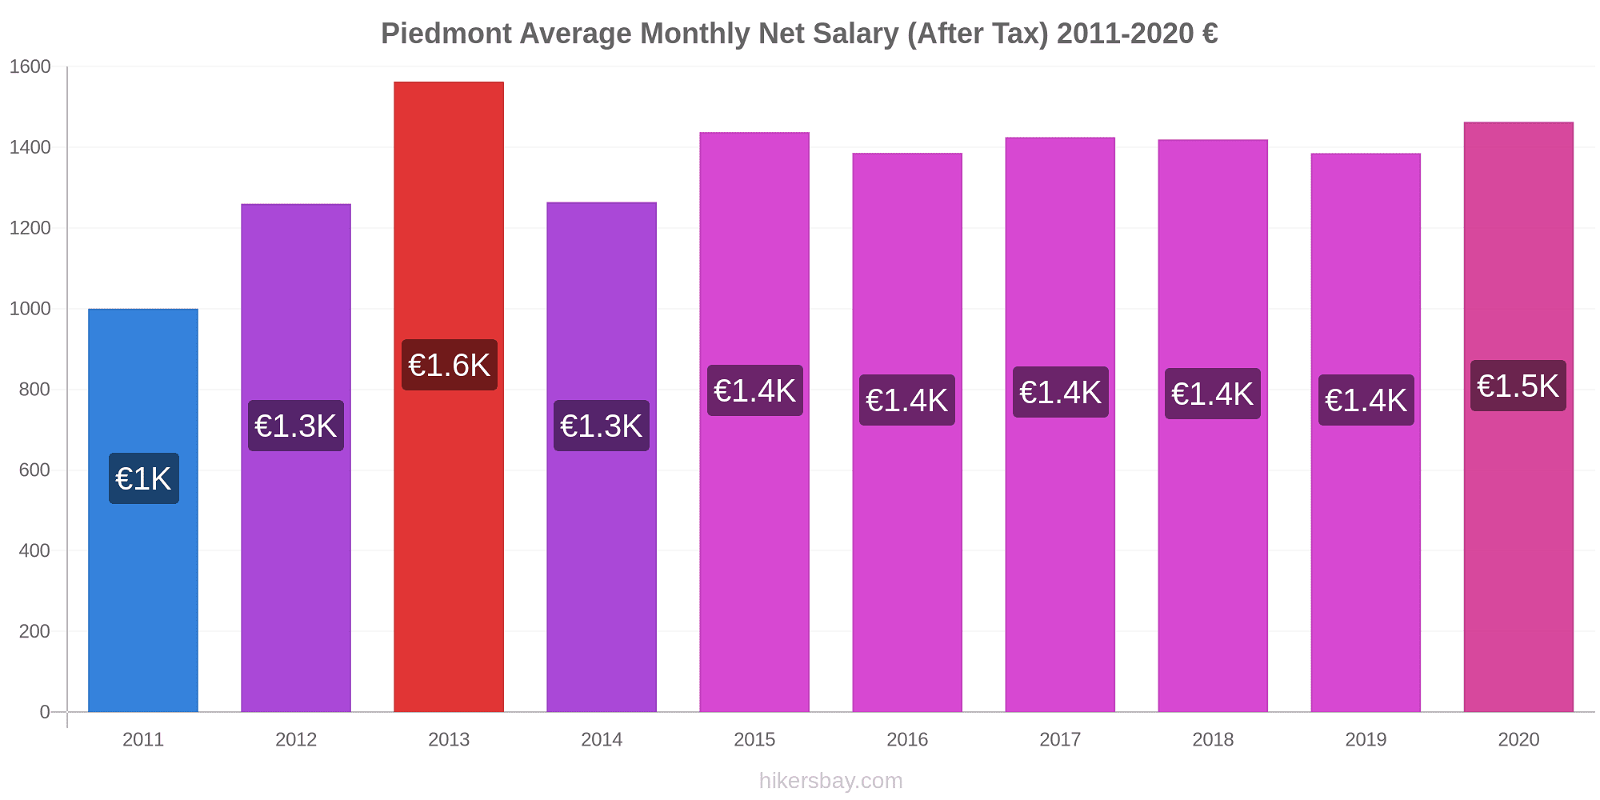 Piedmont price changes Average Monthly Net Salary (After Tax) hikersbay.com